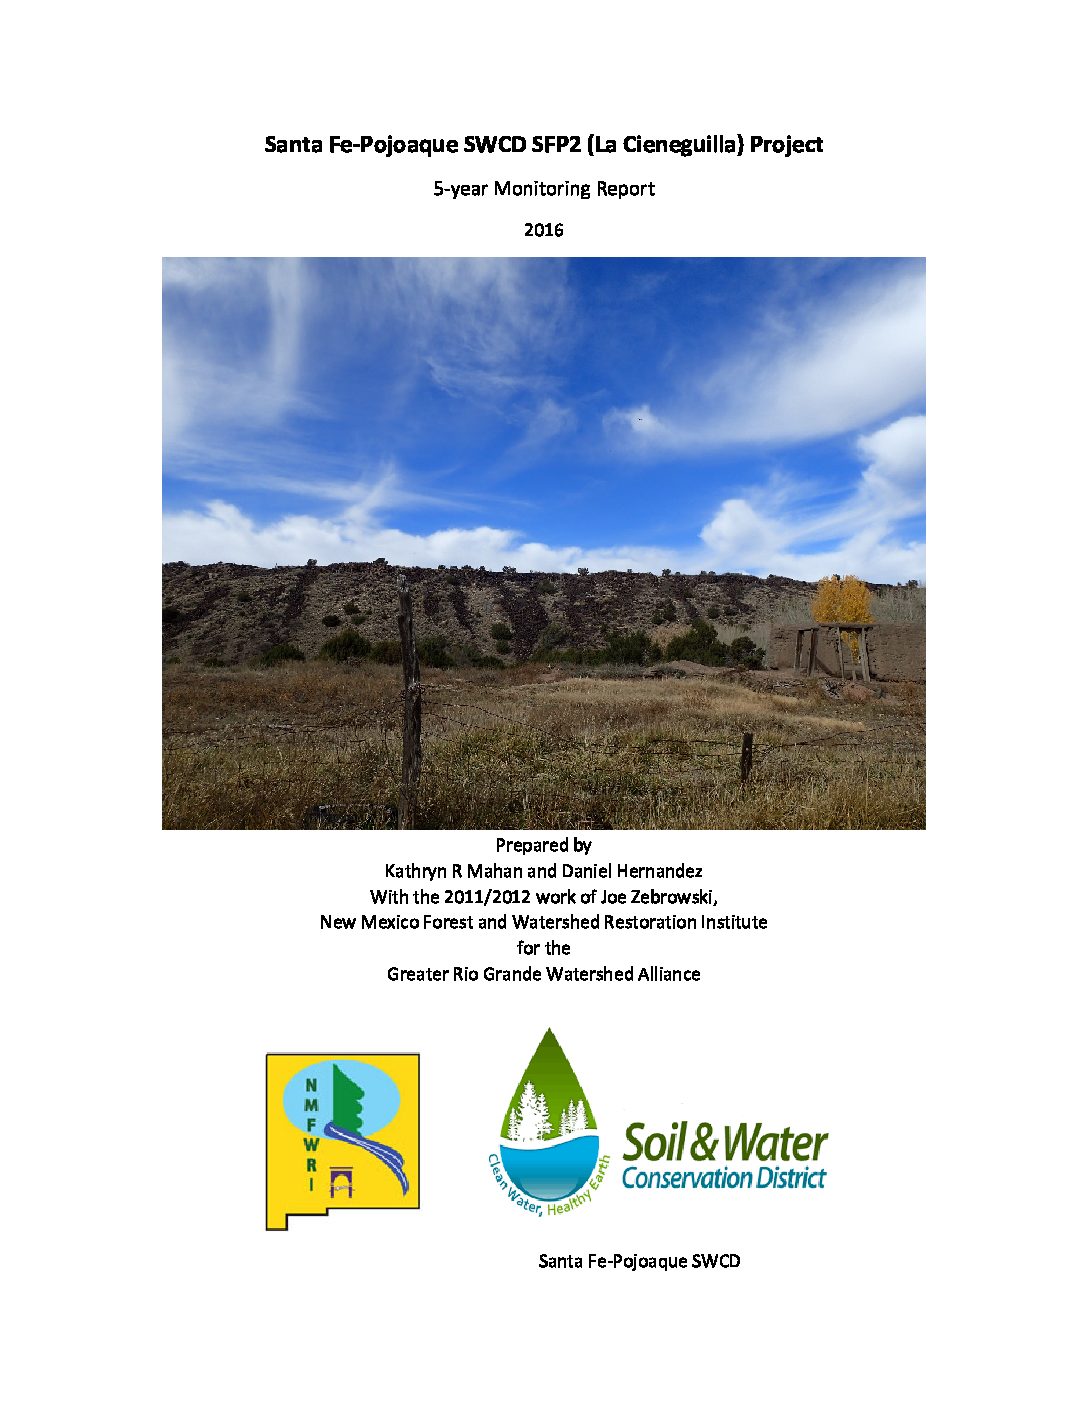 Santa Fe-Pojoaque SWCD SFP2 (La Cieneguilla) Project, 5-year Monitoring Report, 2016